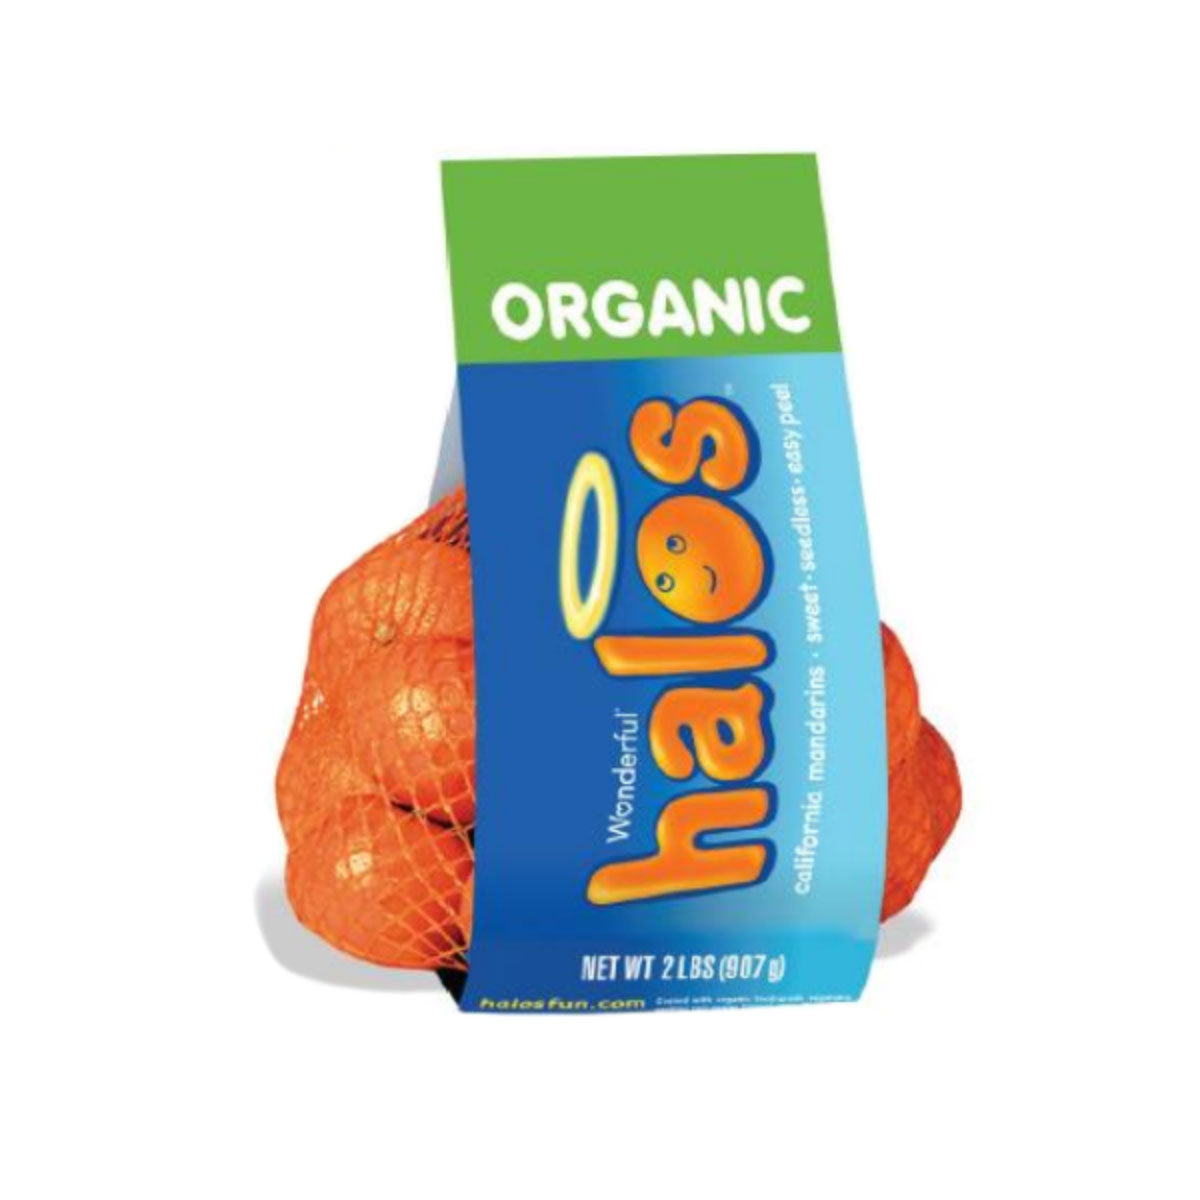 Wonderful Organic Halo Mandarins 2 LB